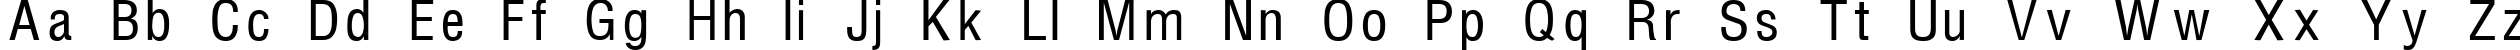 Пример написания английского алфавита шрифтом HelvCondenced_105N